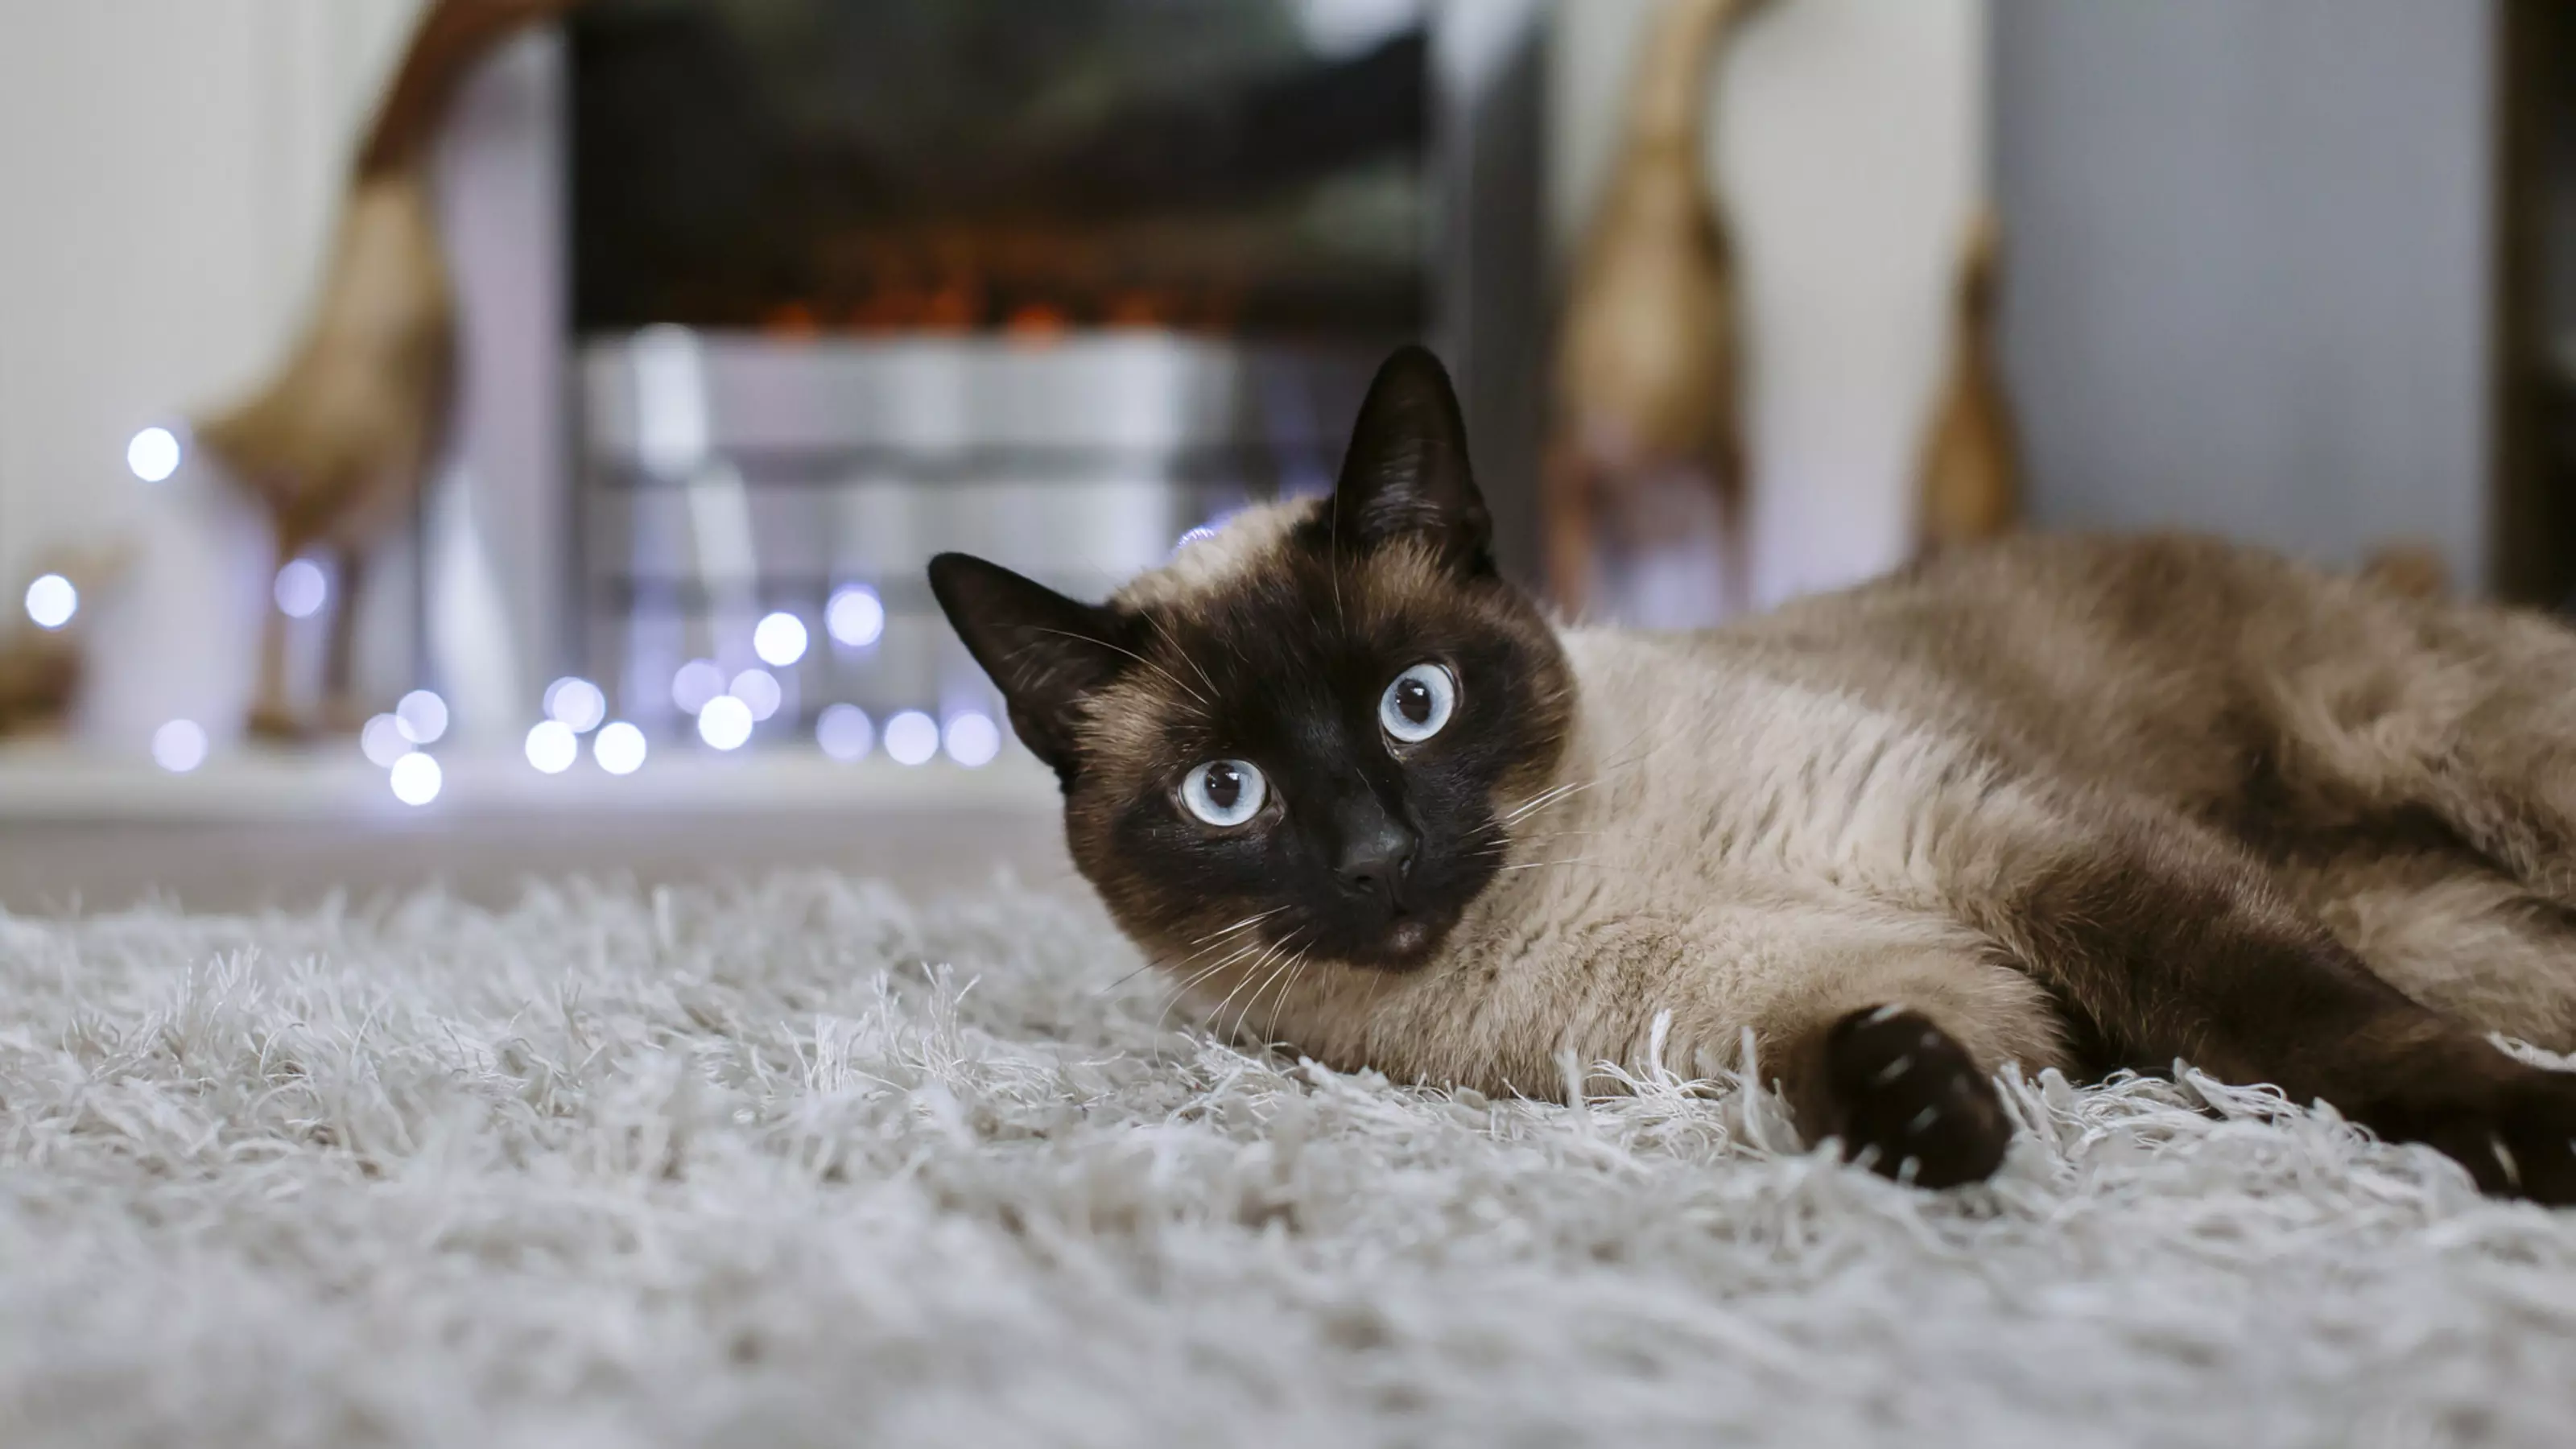 Burmese-cross cat lying on fluffy rug, looking into camera